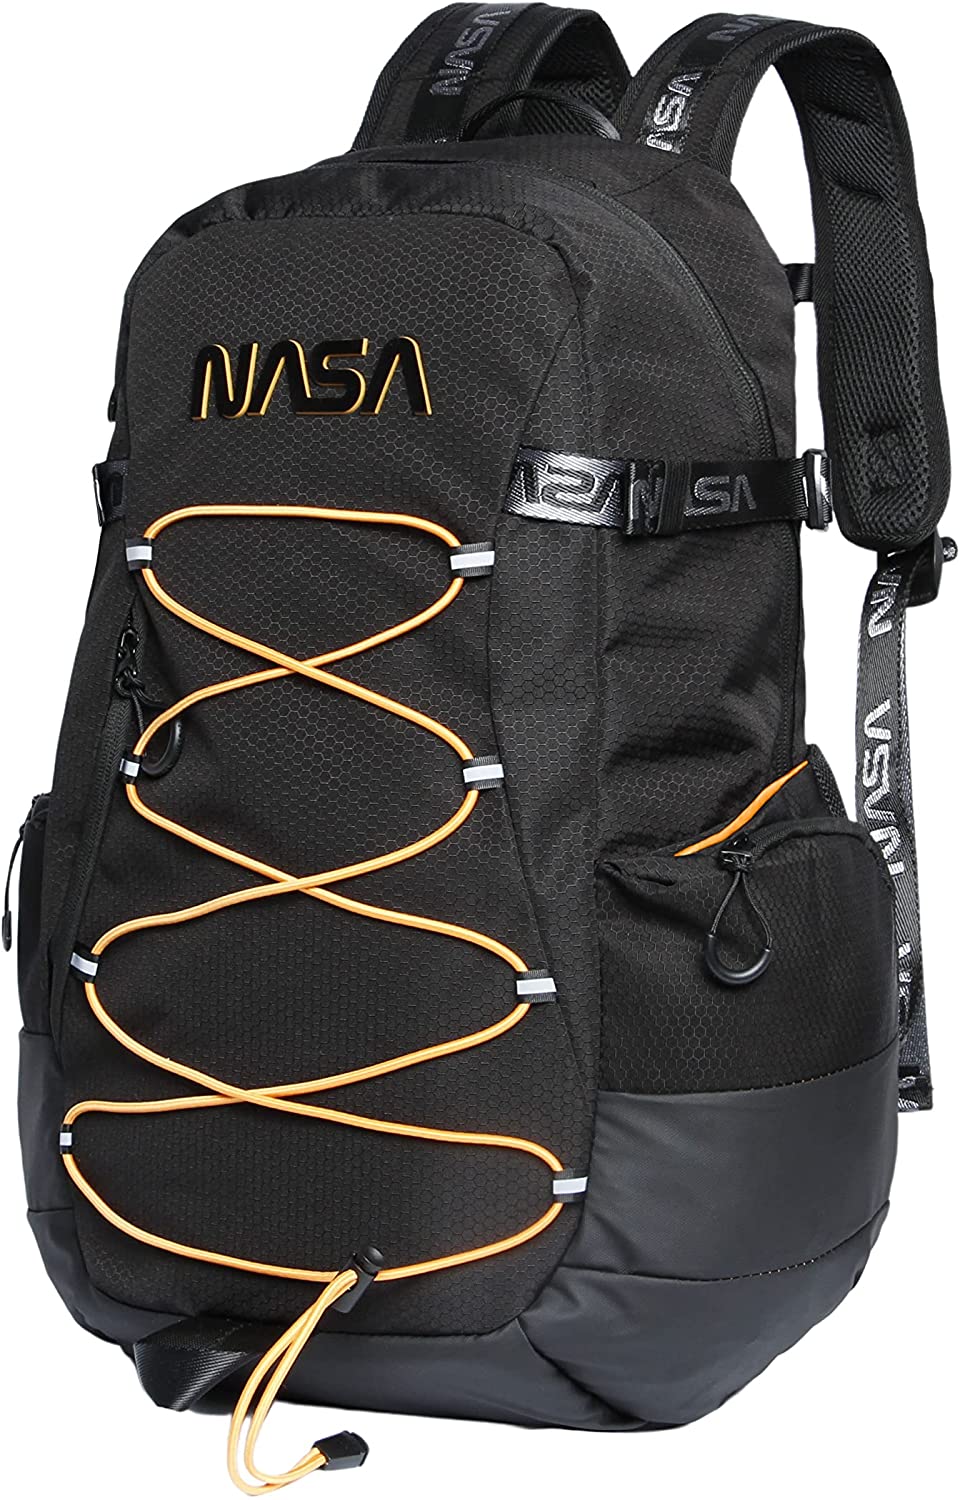 NASA Neon-Pro Backpack, Black